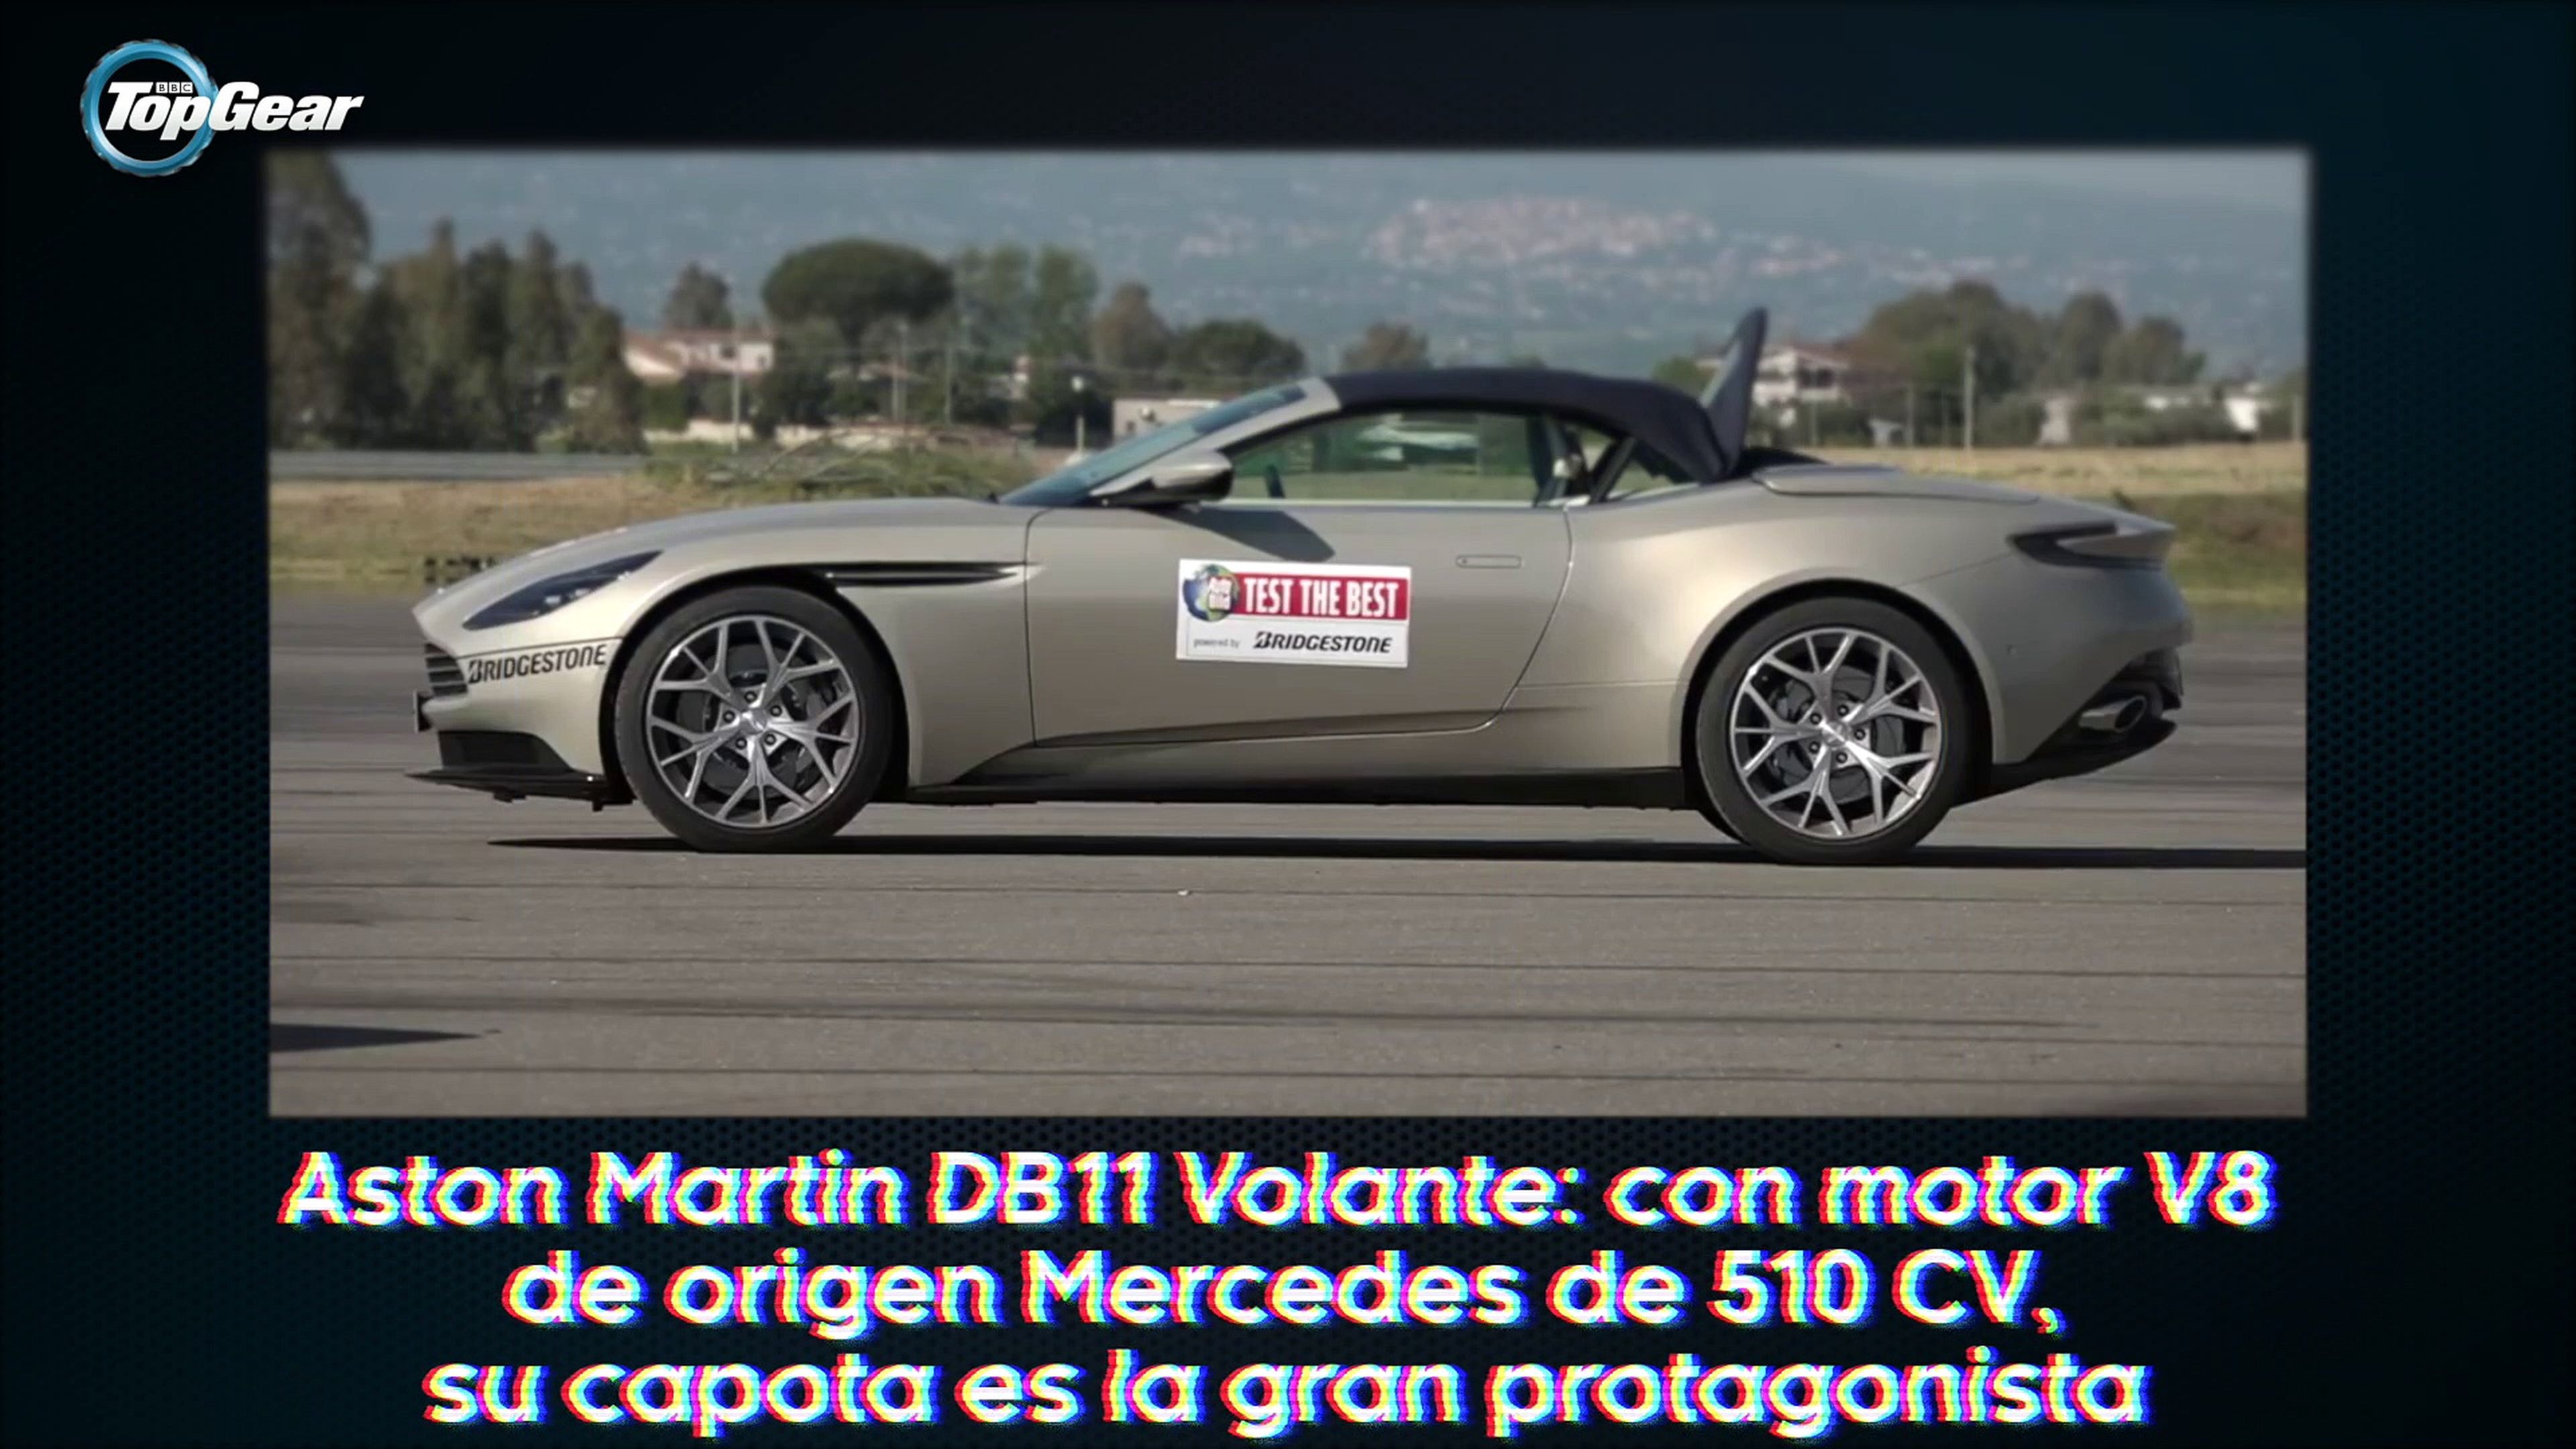 VÍDEO: así se descapota el Aston Martin DB11 Volante, ¡mágico! [TG]